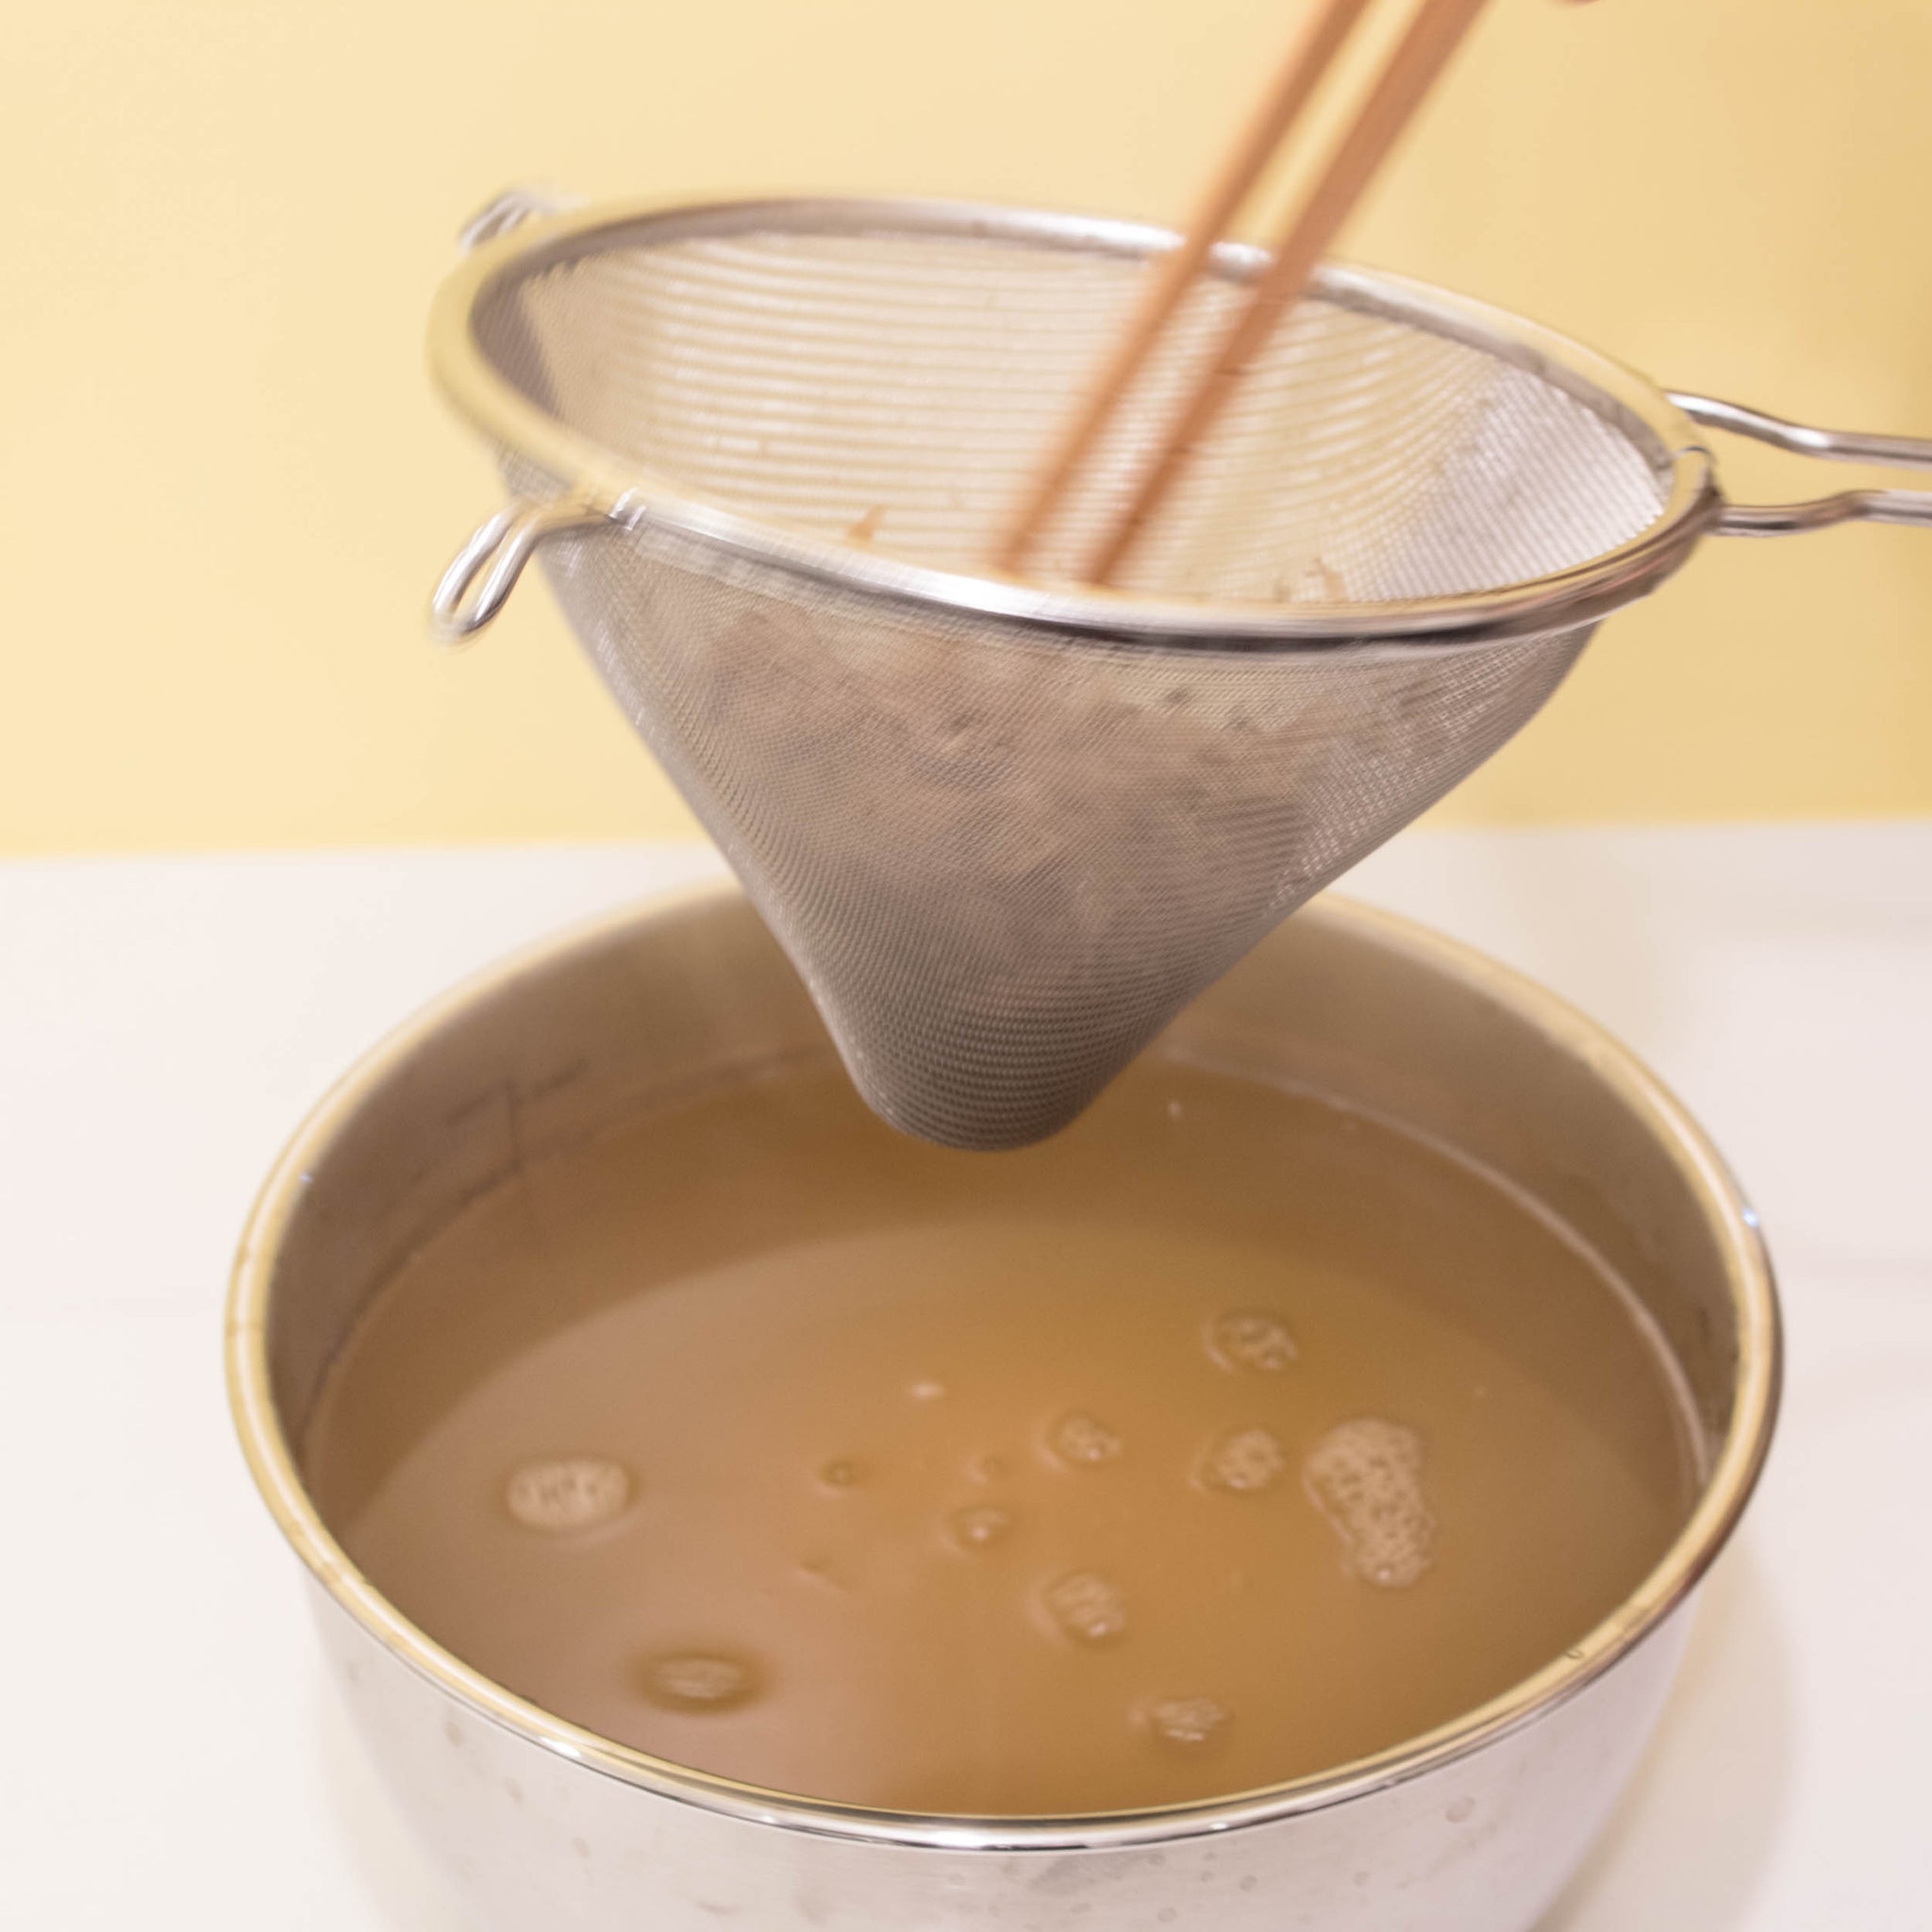 Shimomura Professional Stainless Soup Strainer 30880